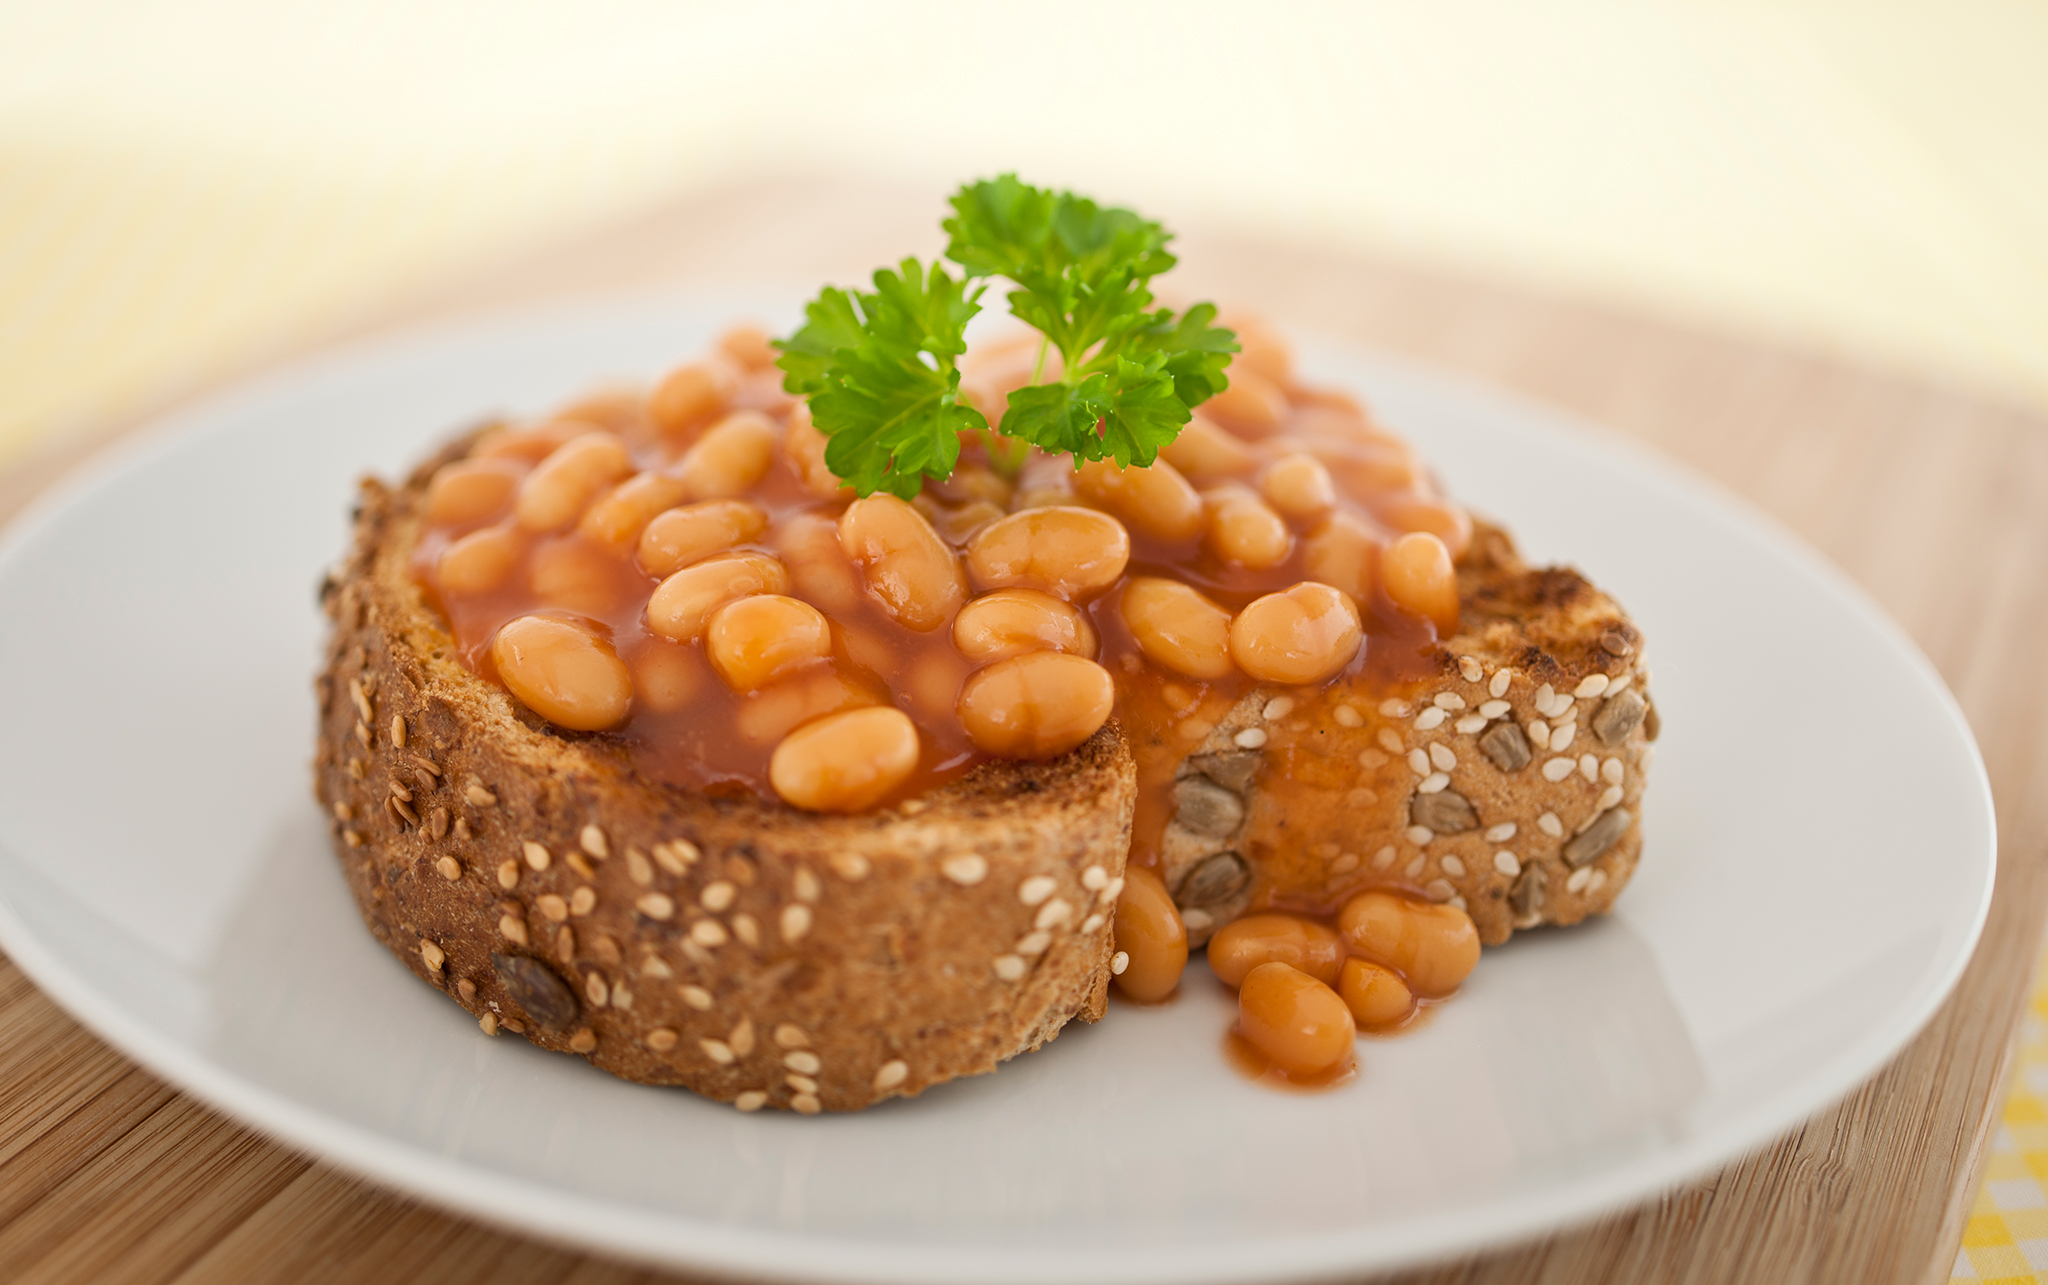 beans_on_toast